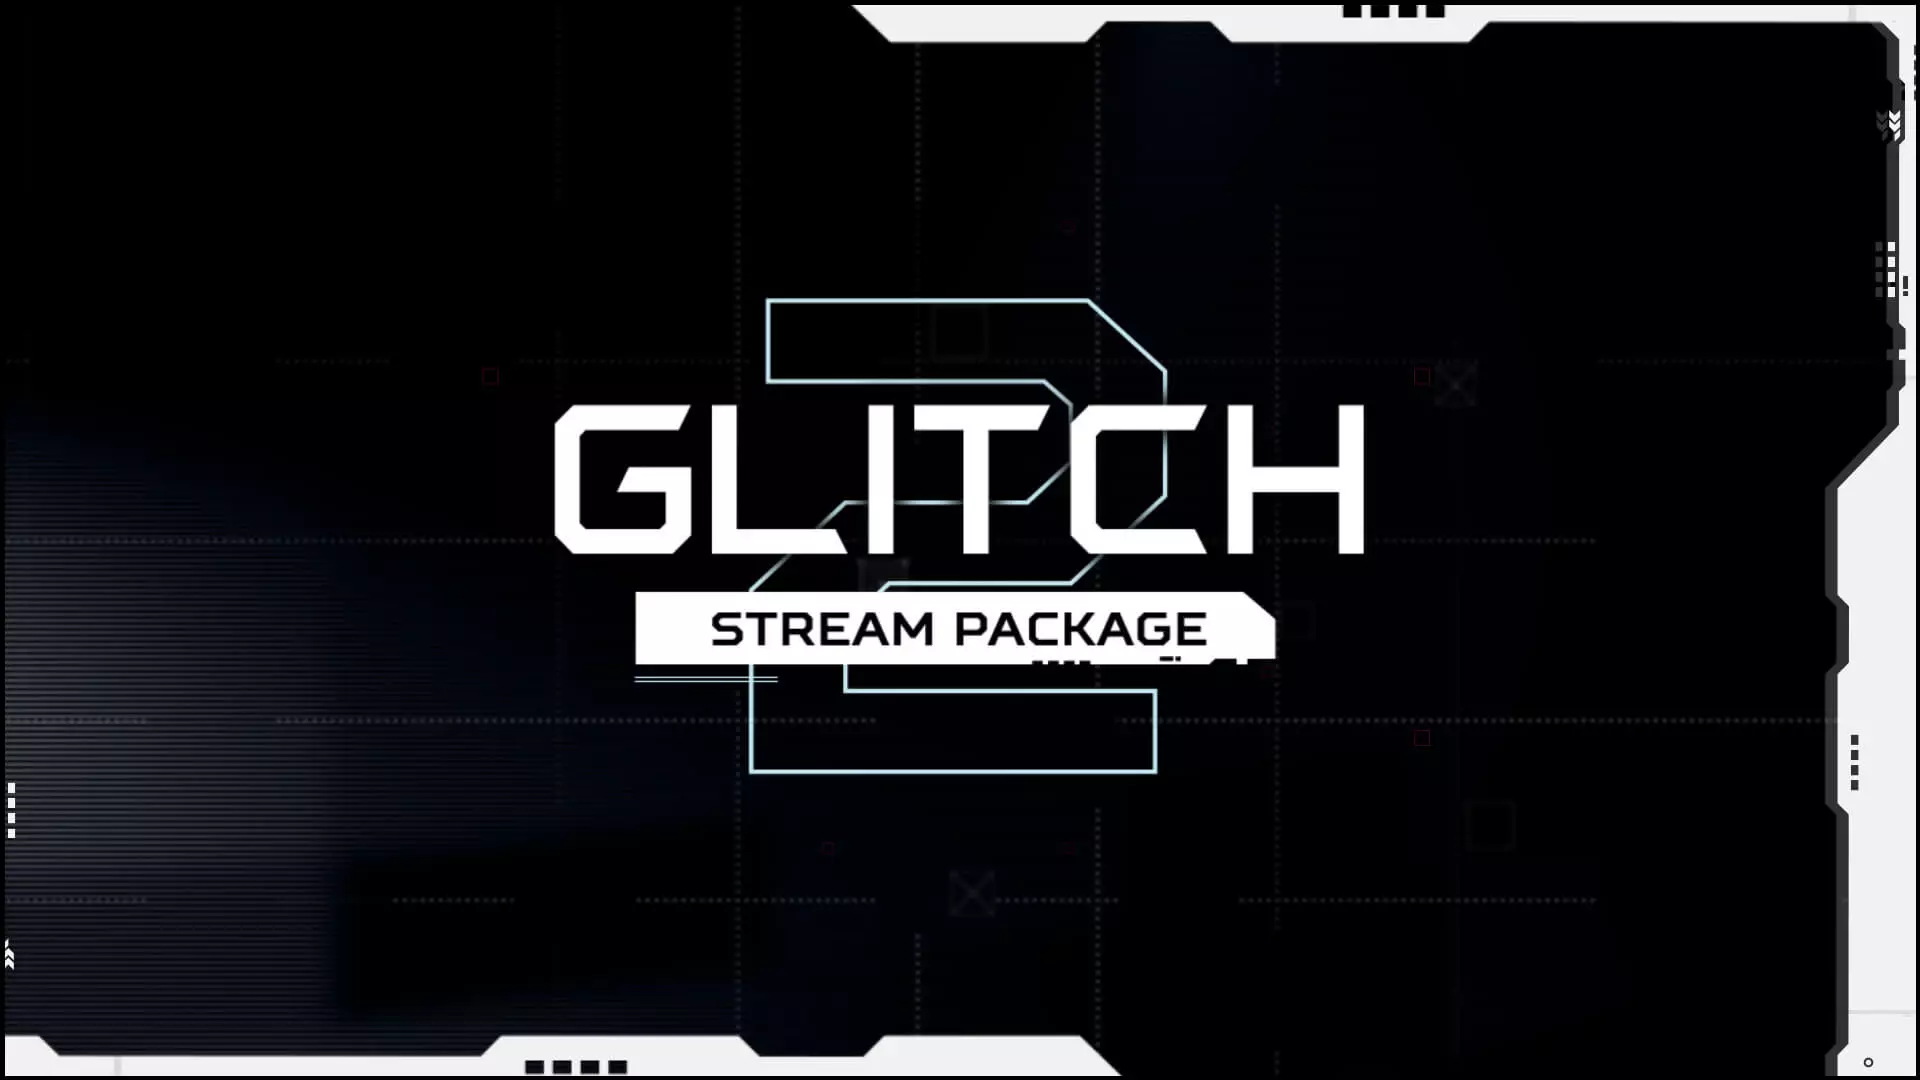 Glitch 2 - Stream Package - Main Image